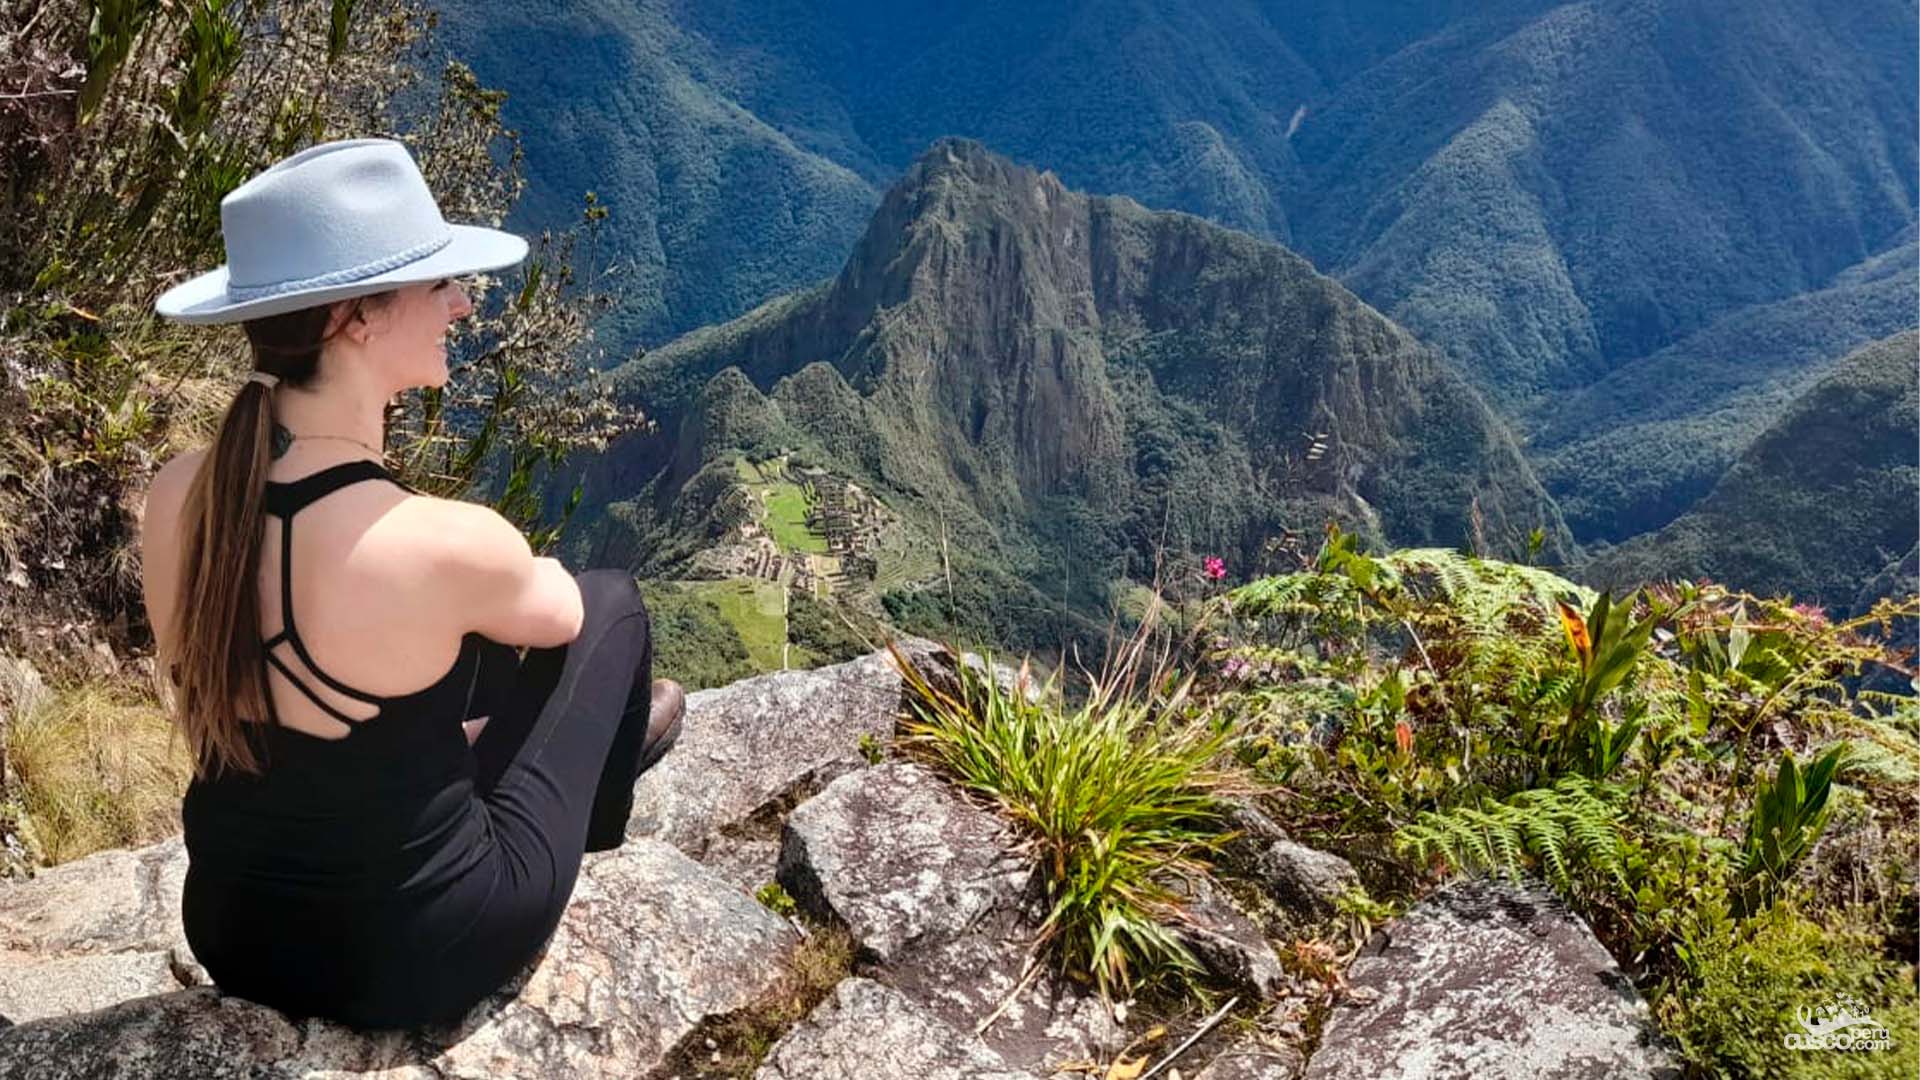 Vista de Machu Picchu desde la cima de la montaña Machu Picchu. Fuente: CuscoPeru.com